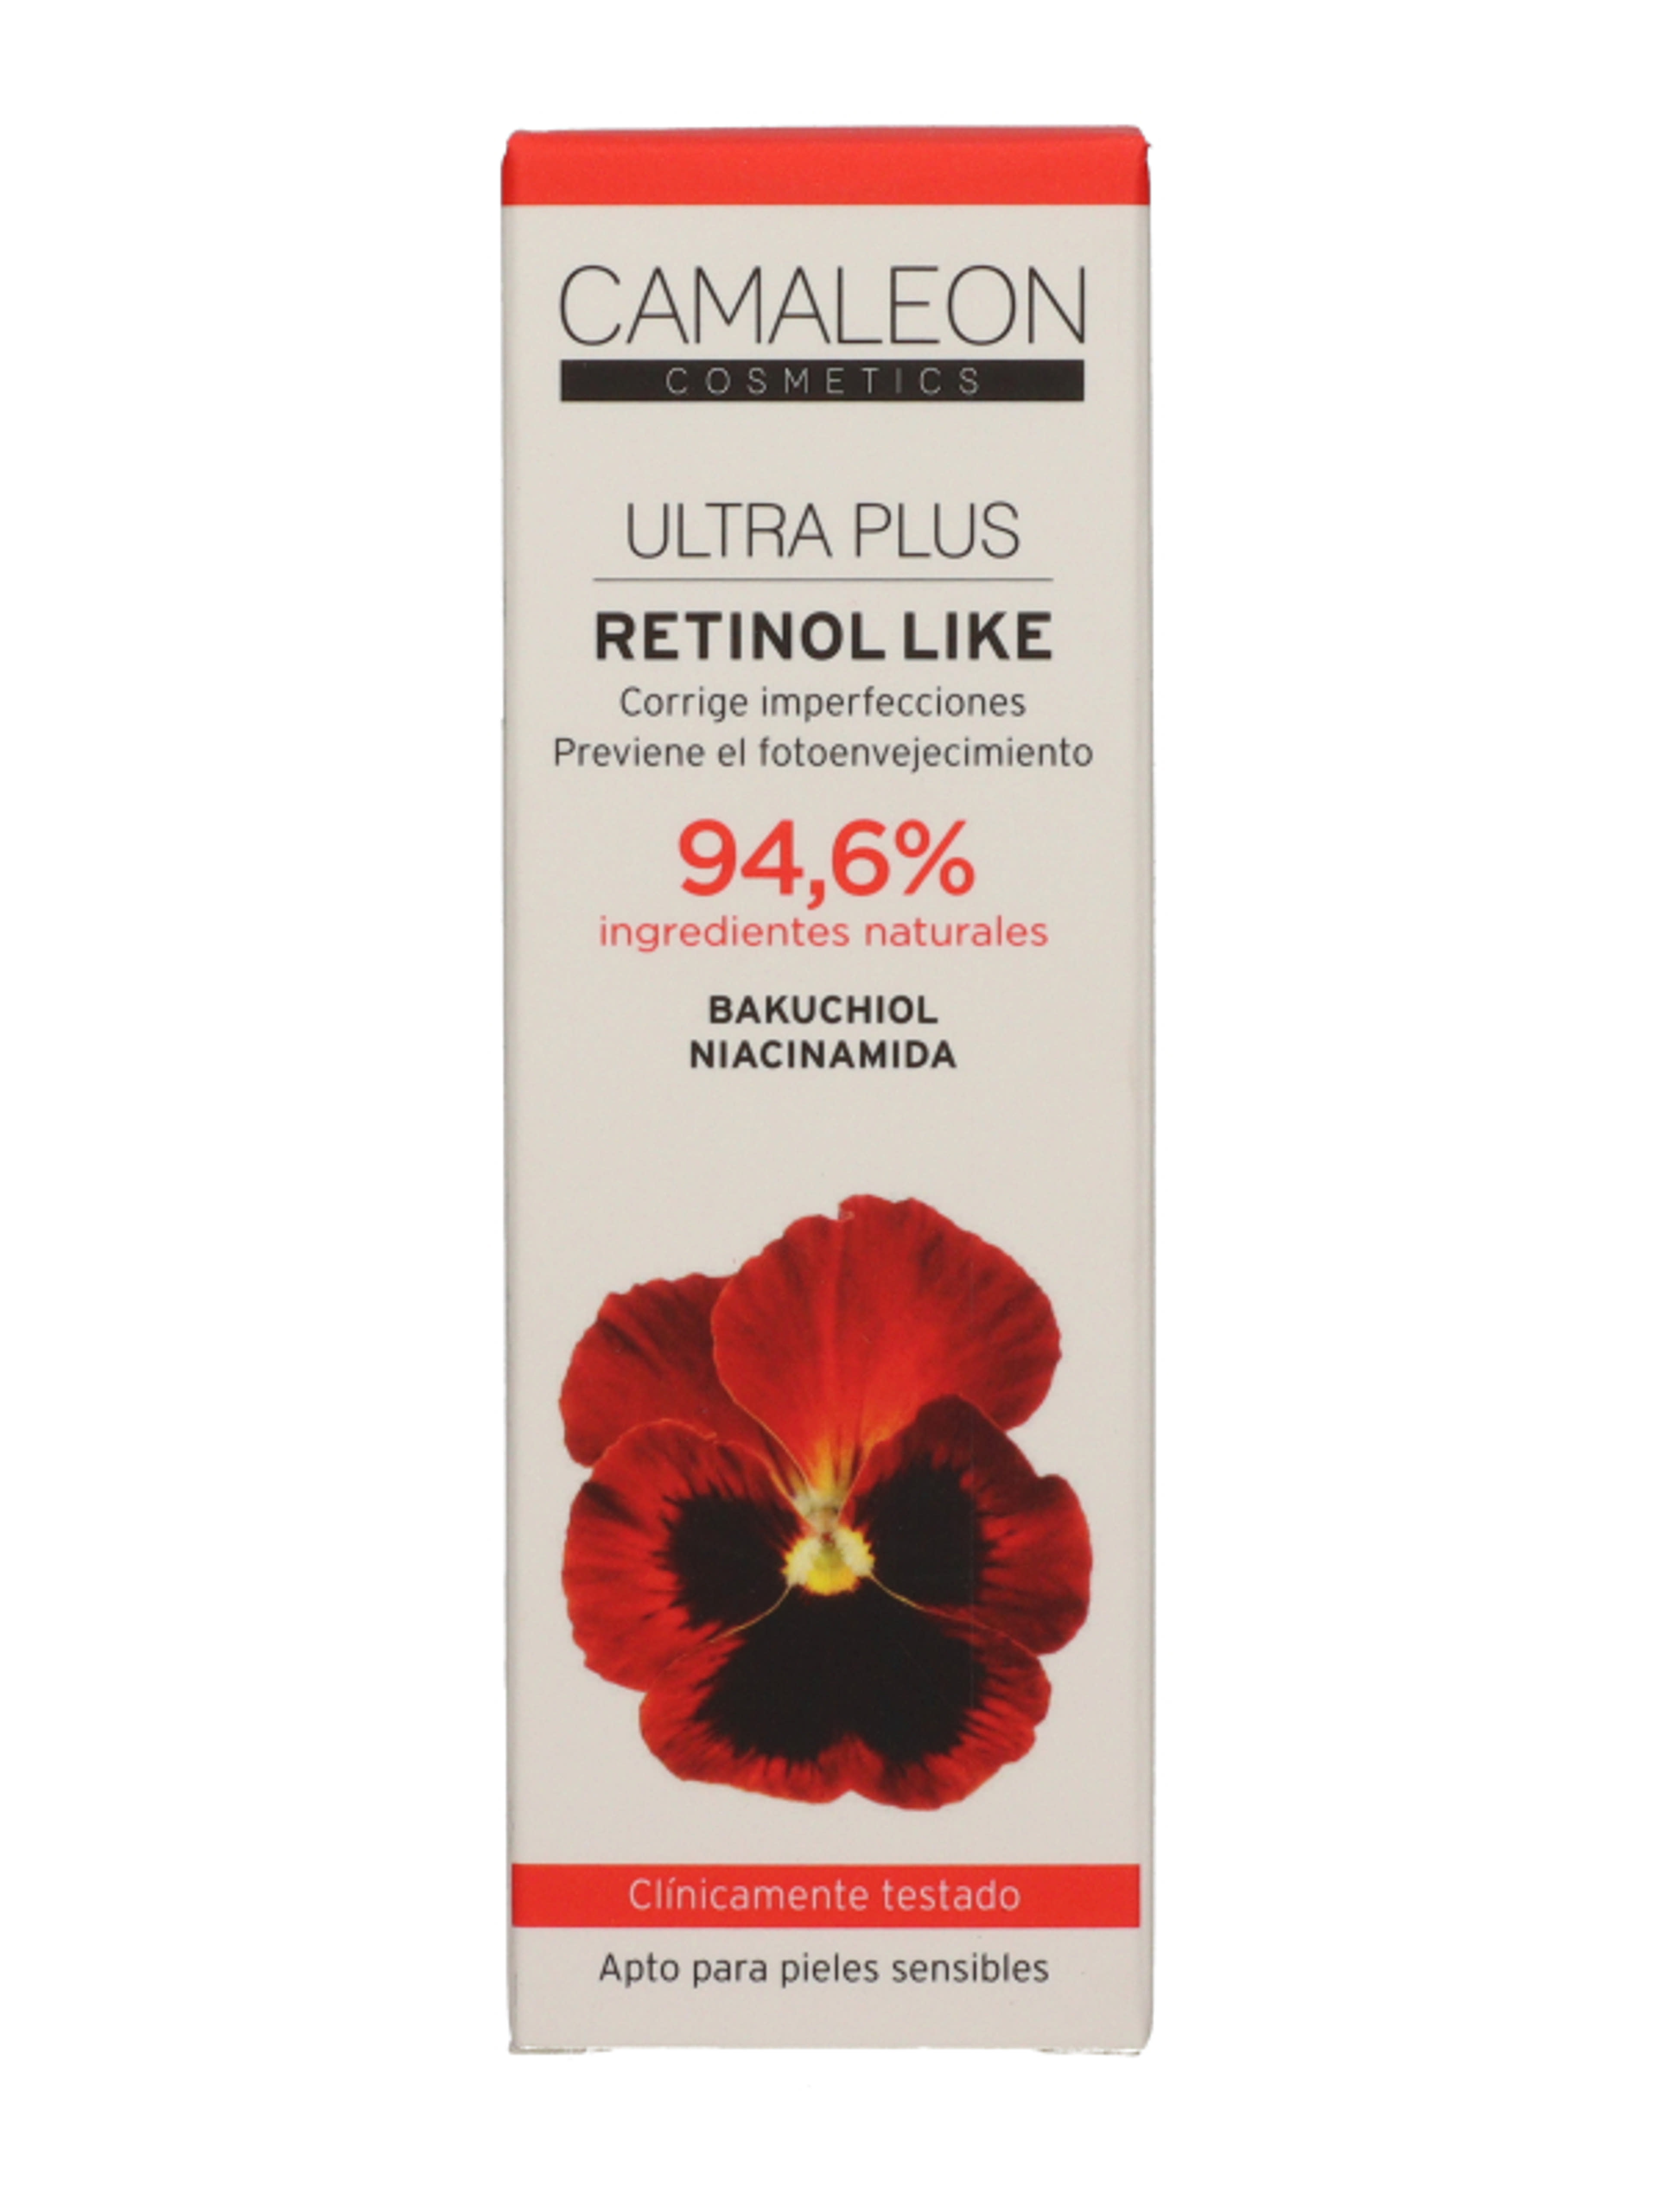 Camaleon Ultra Plus Retinol Like szérum - 15 ml-1